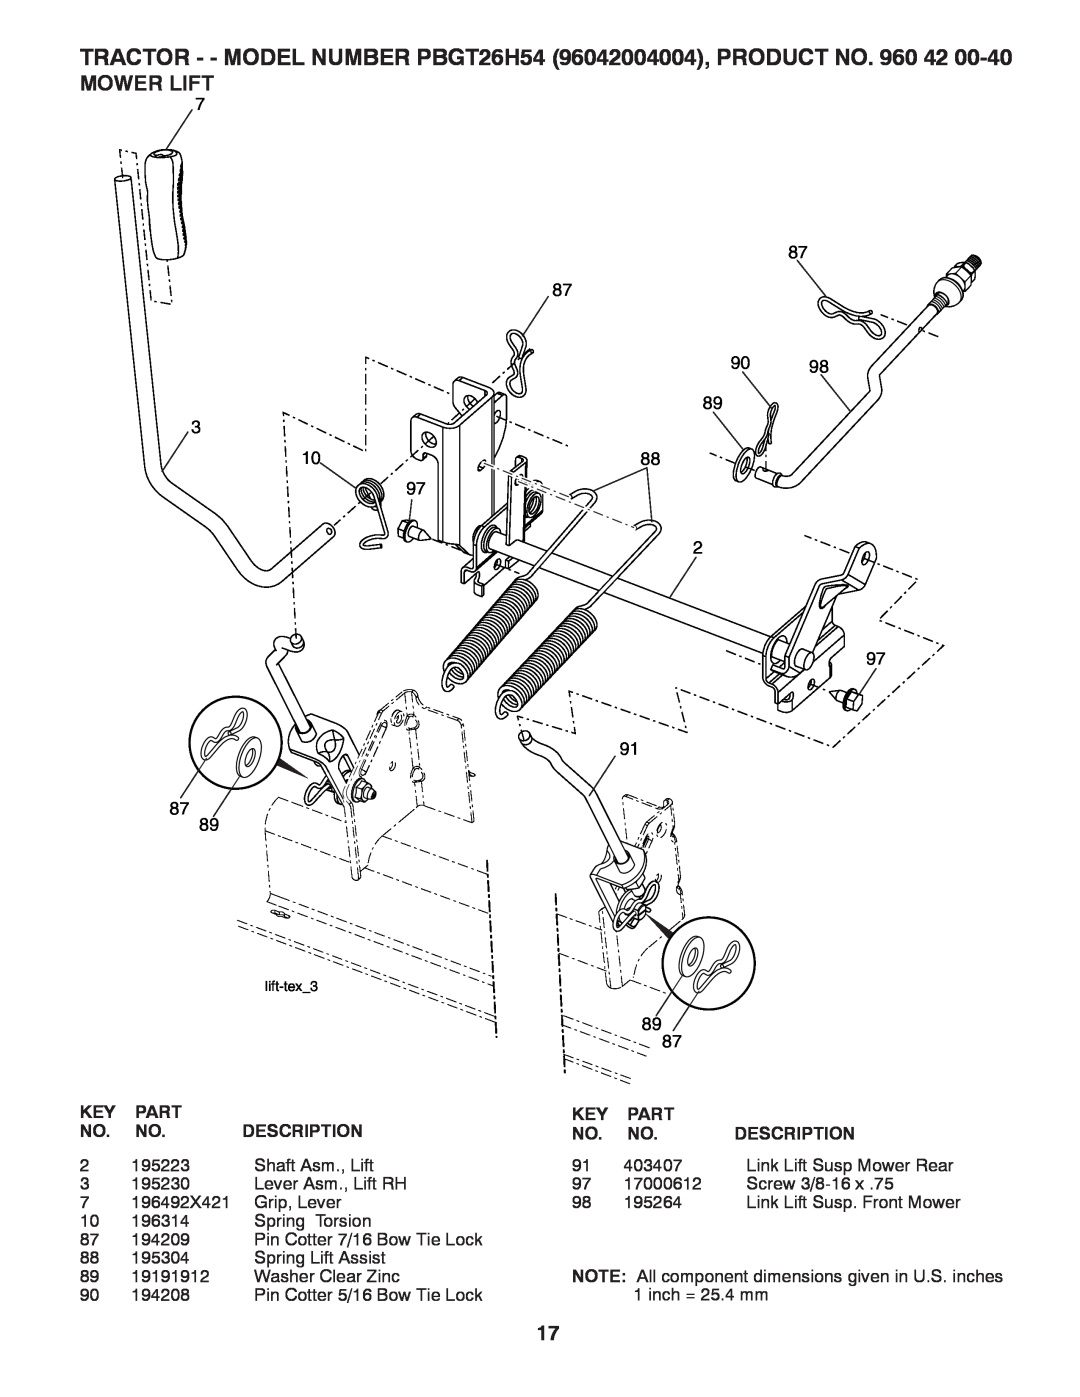 Poulan manual Mower Lift, TRACTOR - - MODEL NUMBER PBGT26H54 96042004004, PRODUCT NO, Part, Description 